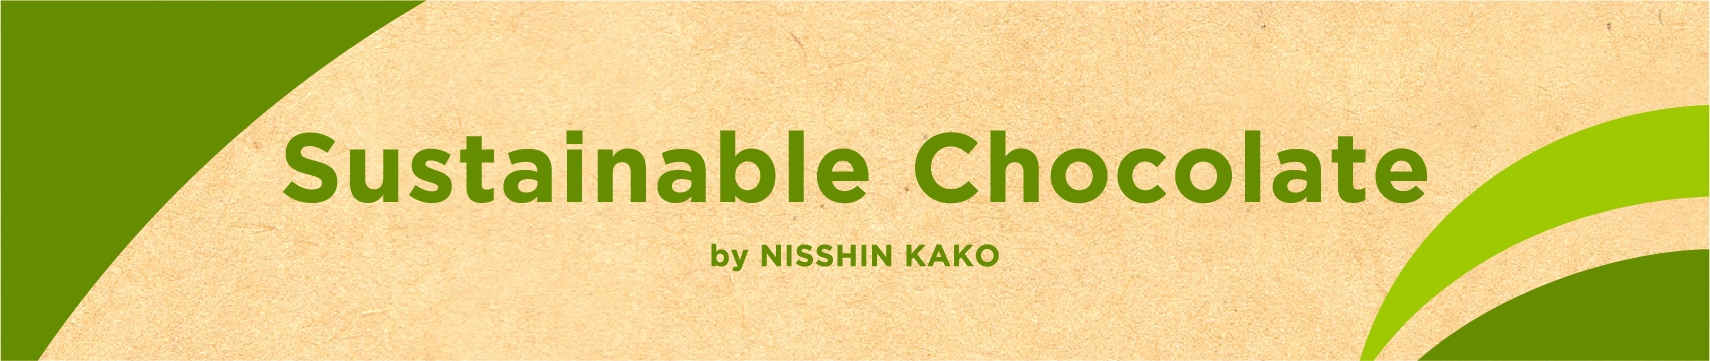 Sustainable Chocolate by NISSHIN KAKO